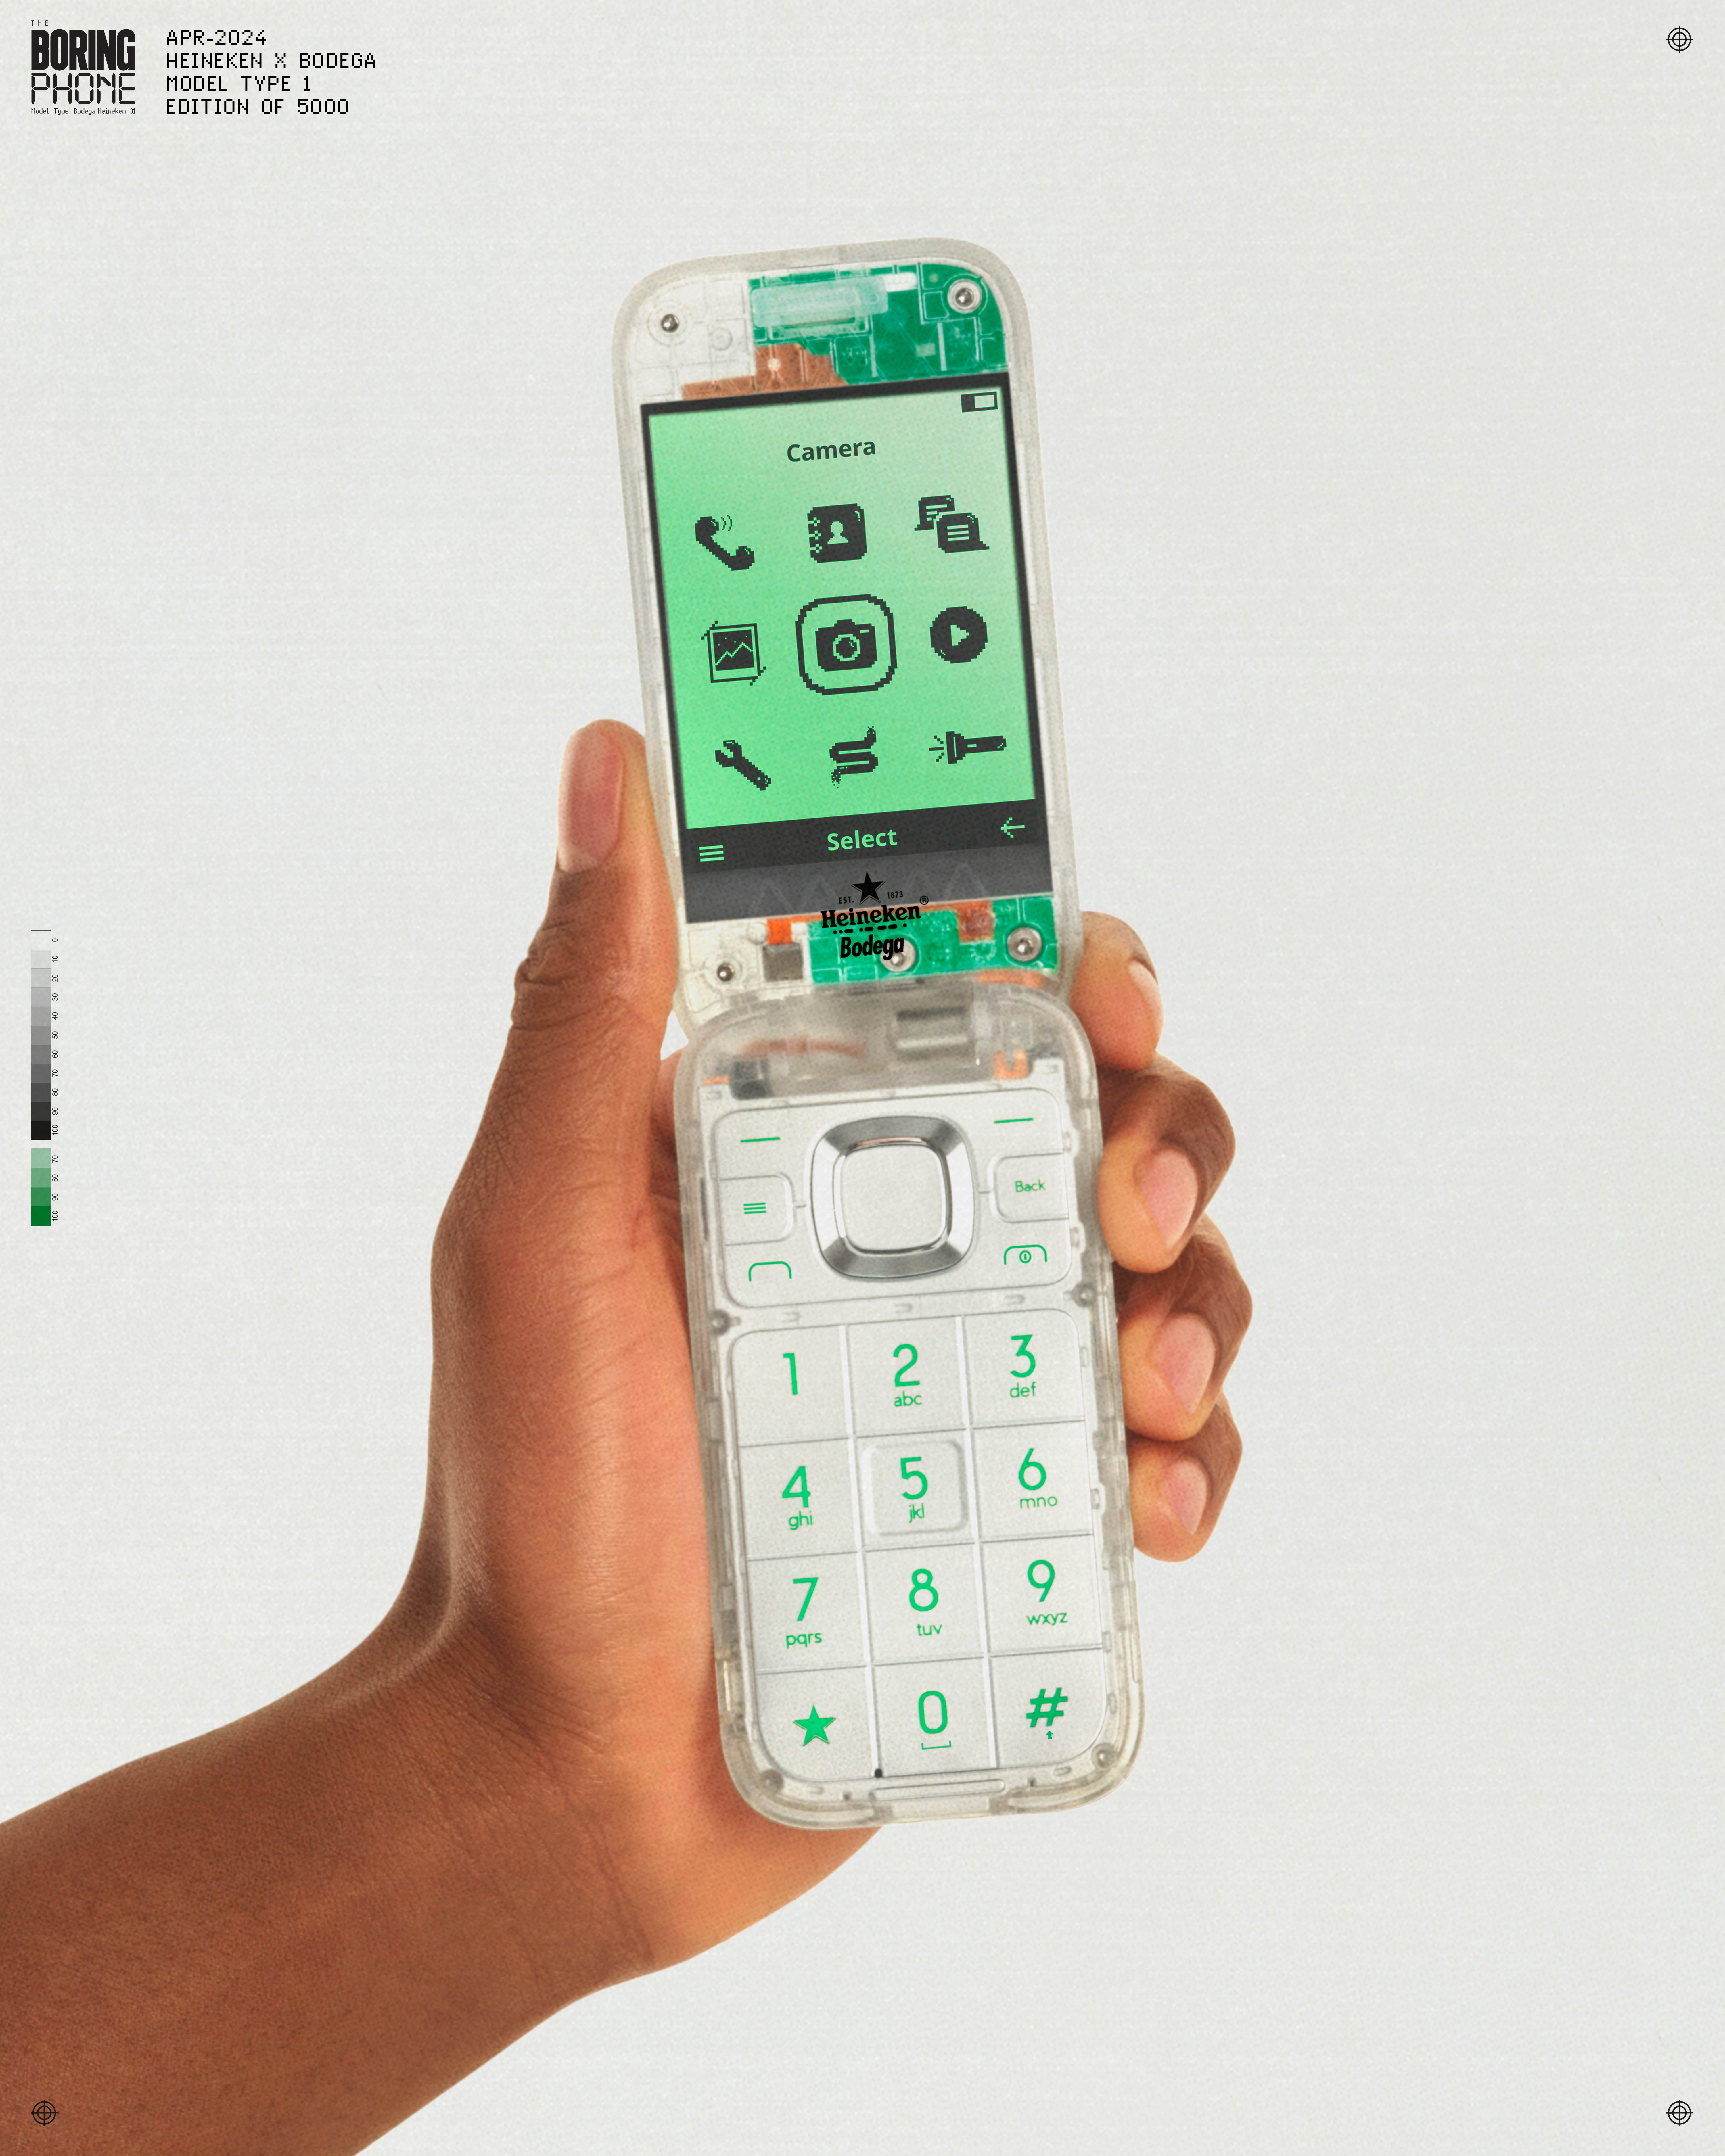 Heineken® & Bodega launch. The no-frills 'Boring Phone'